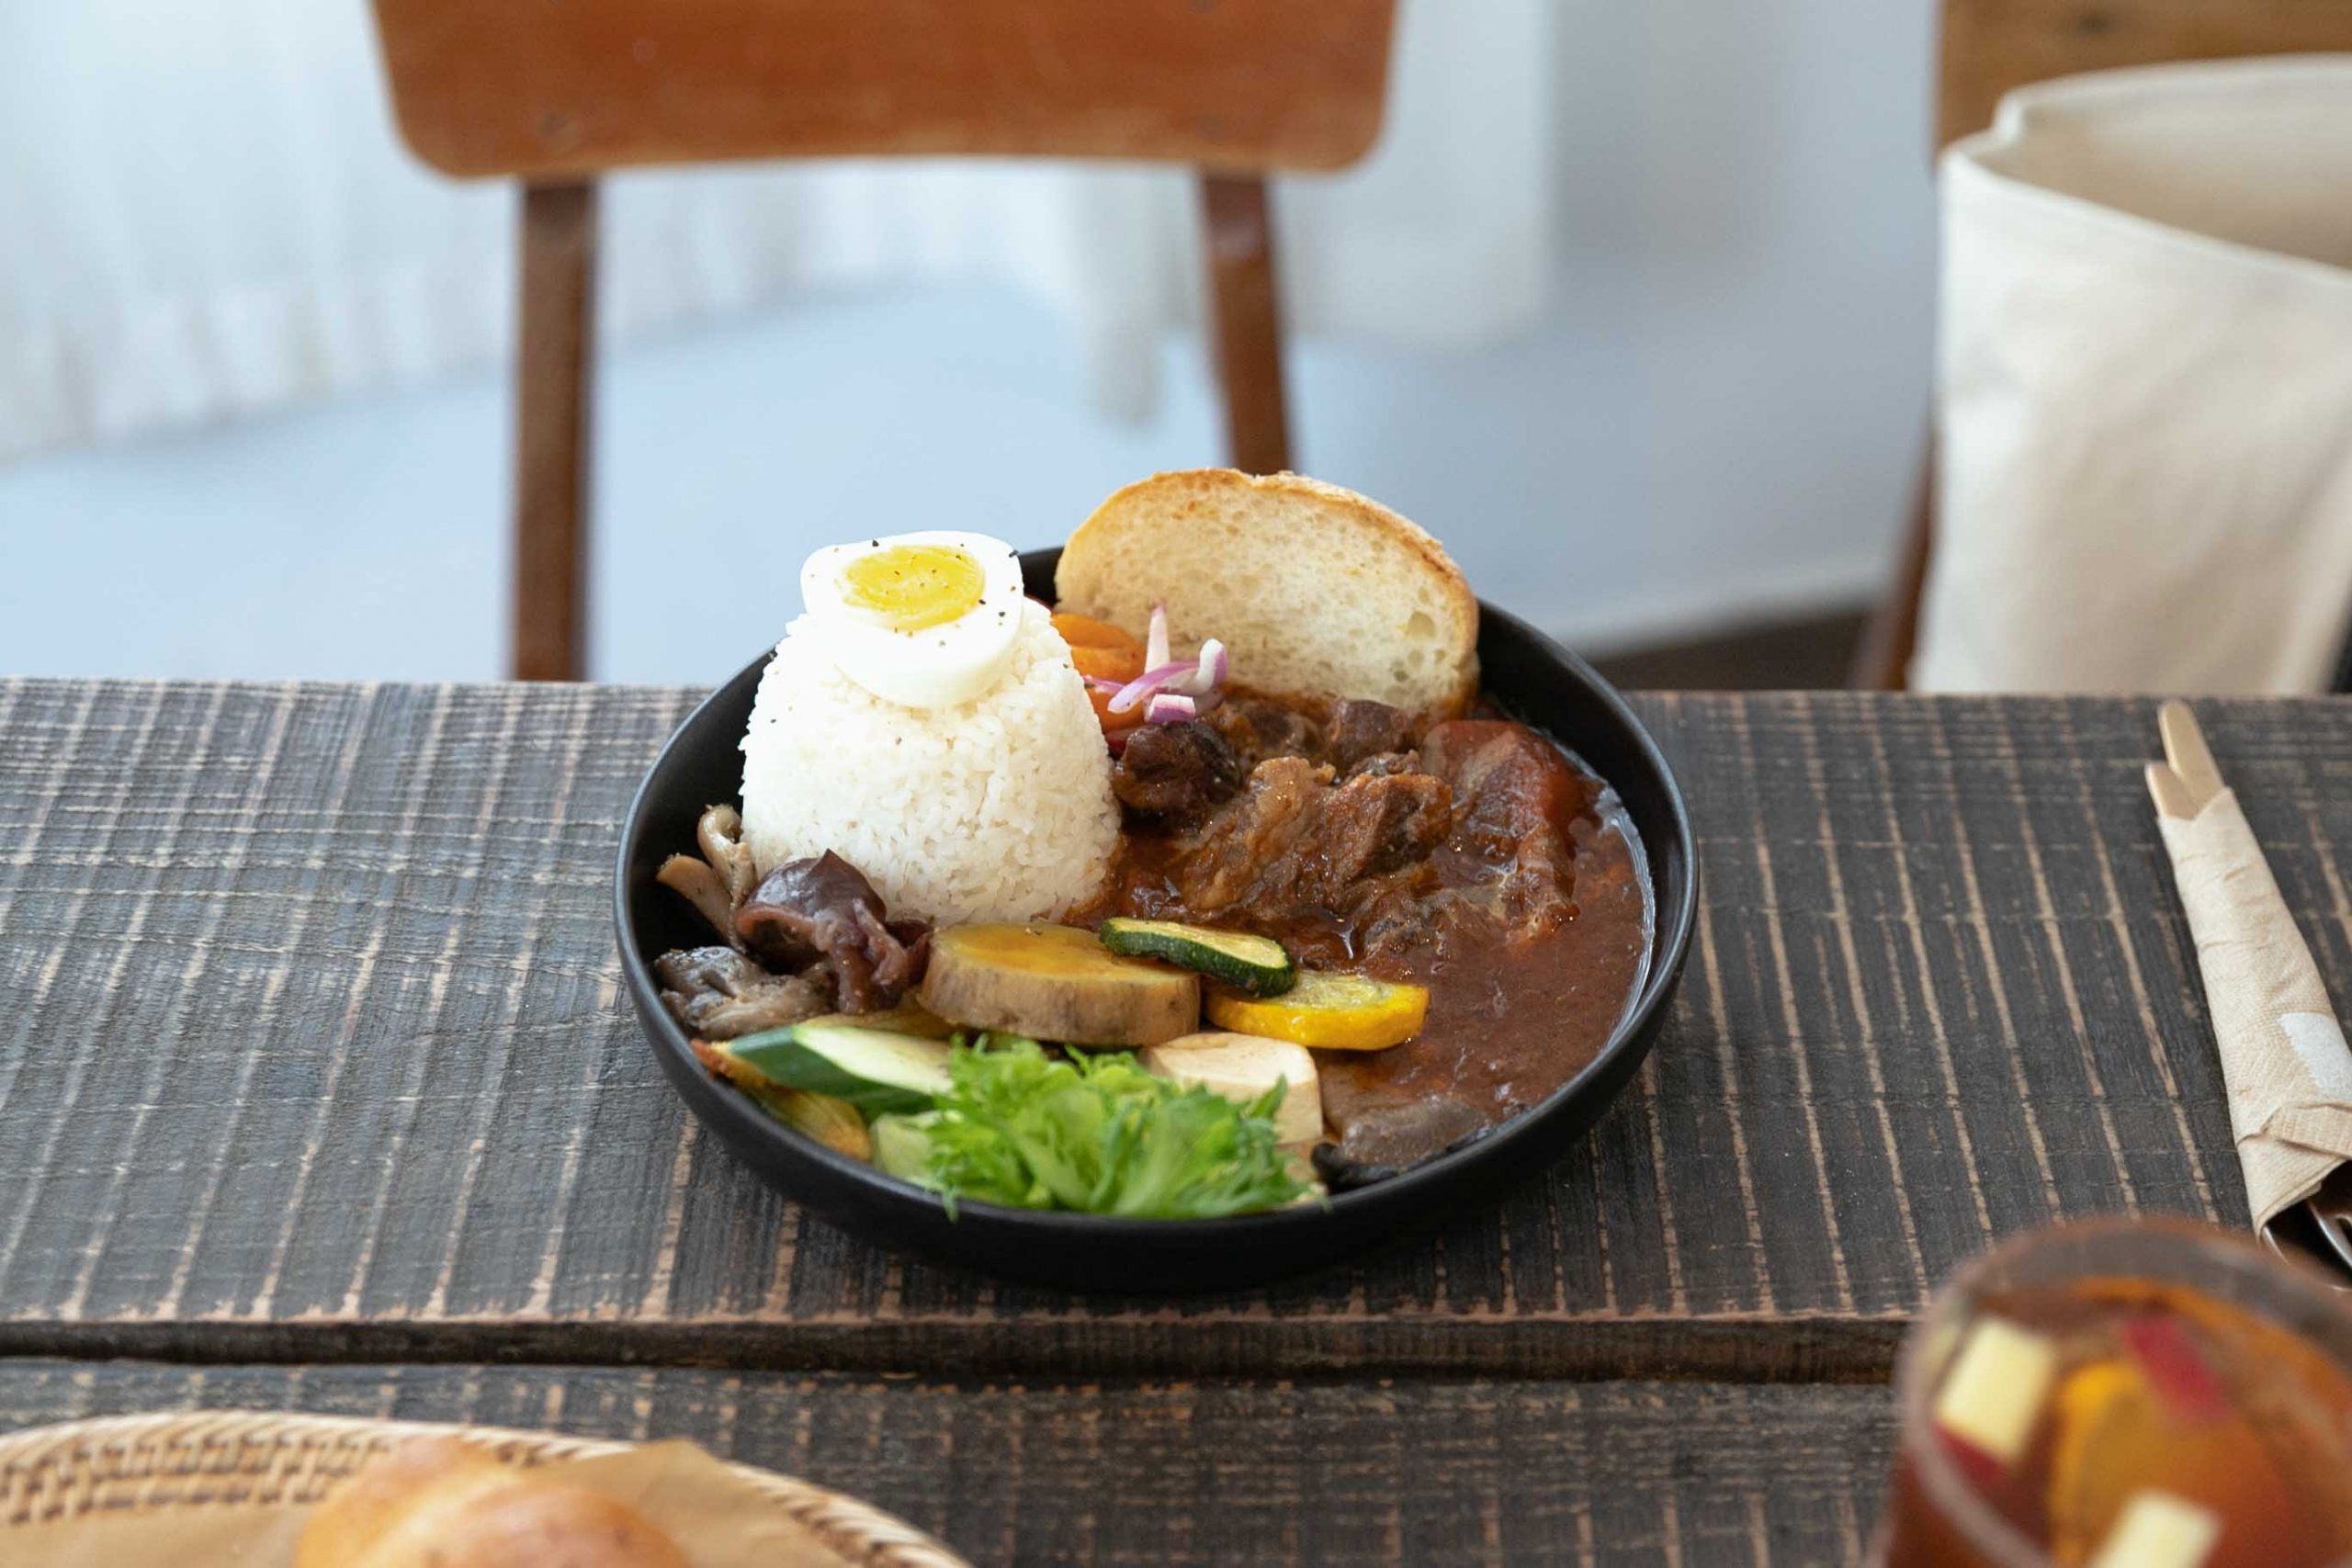 Hidden off｜新竹咖啡廳 早午餐推薦 菜單新改版 迷人巷弄裡的麵包香，逛完大遠百的甜點下午茶。